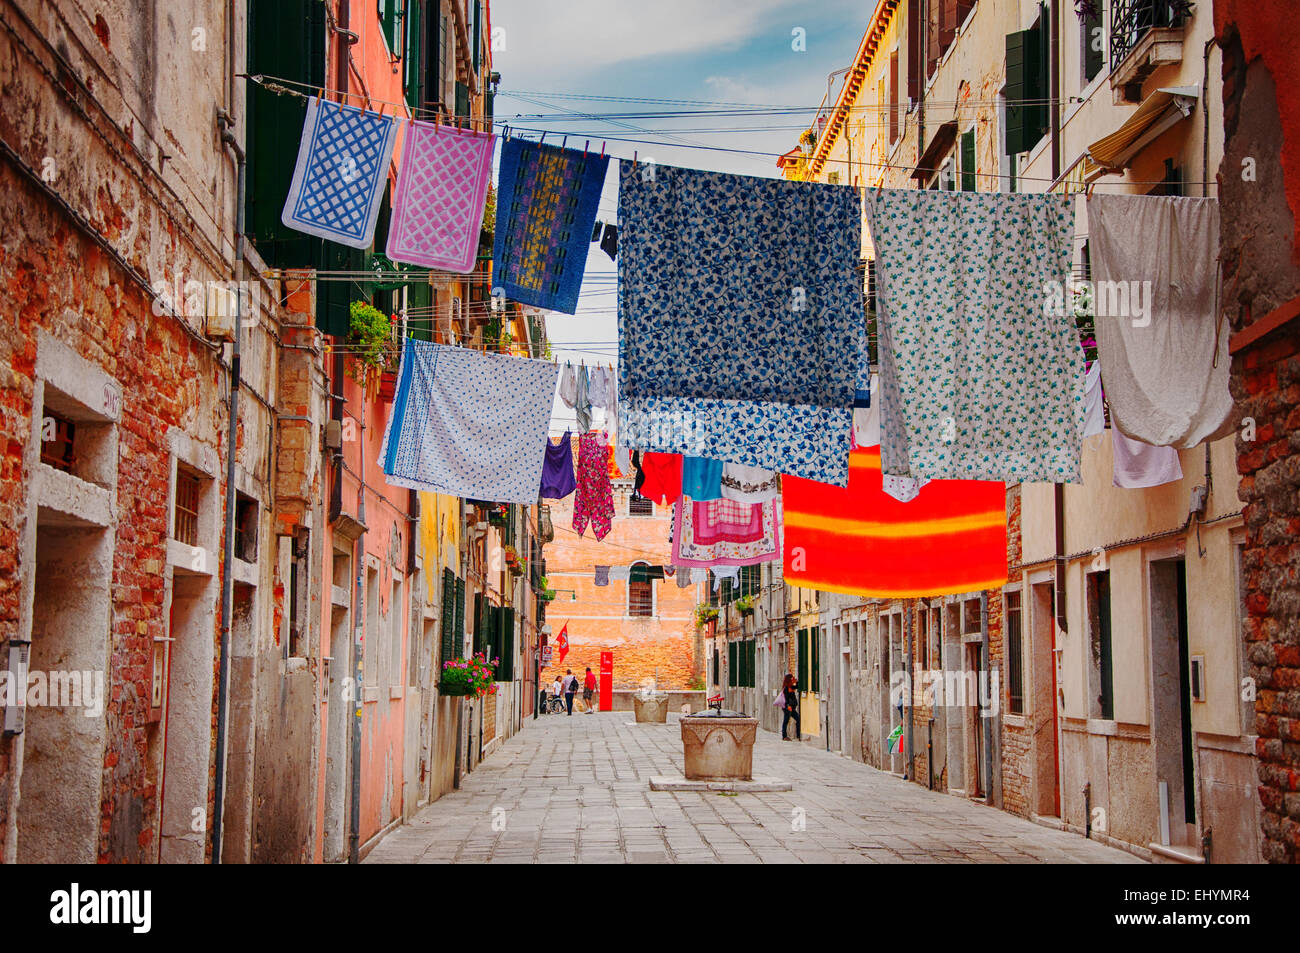 Washing hanging across street, Venice, Italy Stock Photo